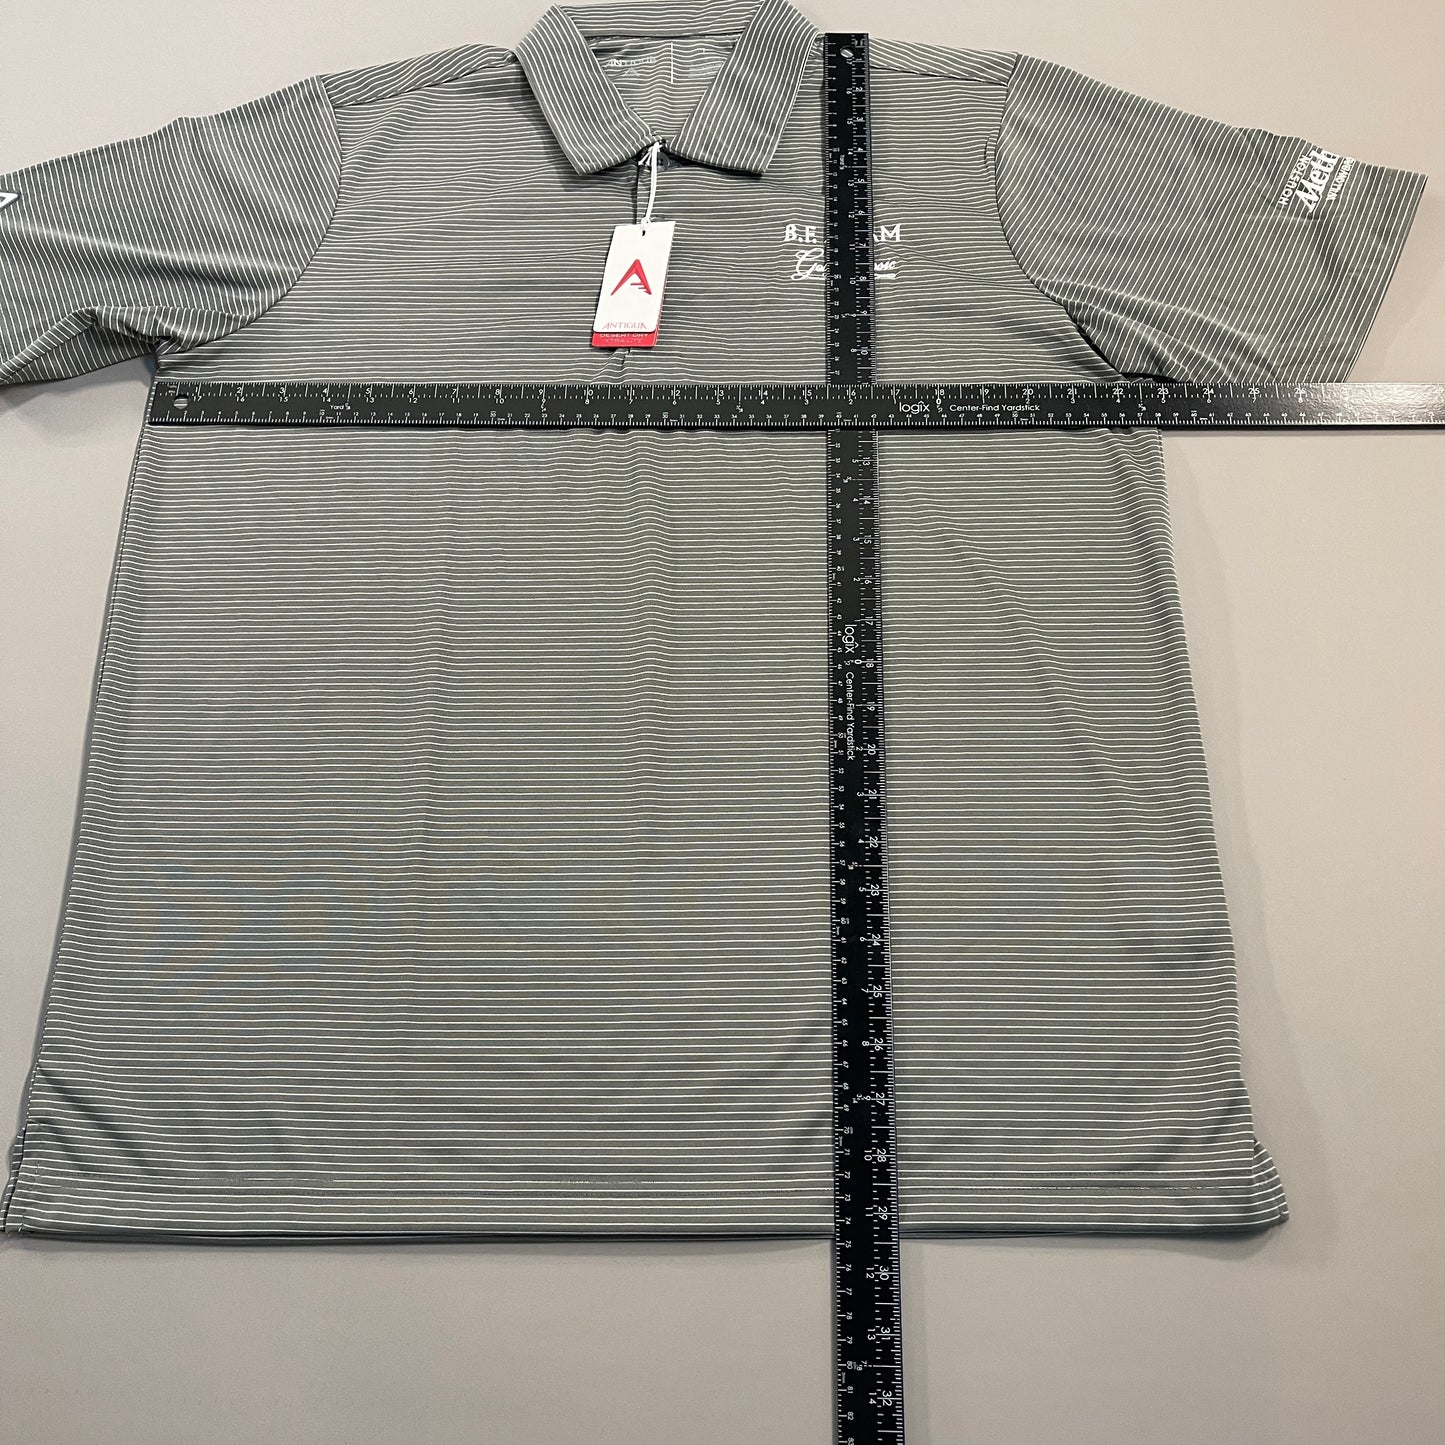 ANTIGUA Quest Auto Stripe Polo Shirt “B.F. Adams Golf Classic” Men's Sz L Steel/White (New)